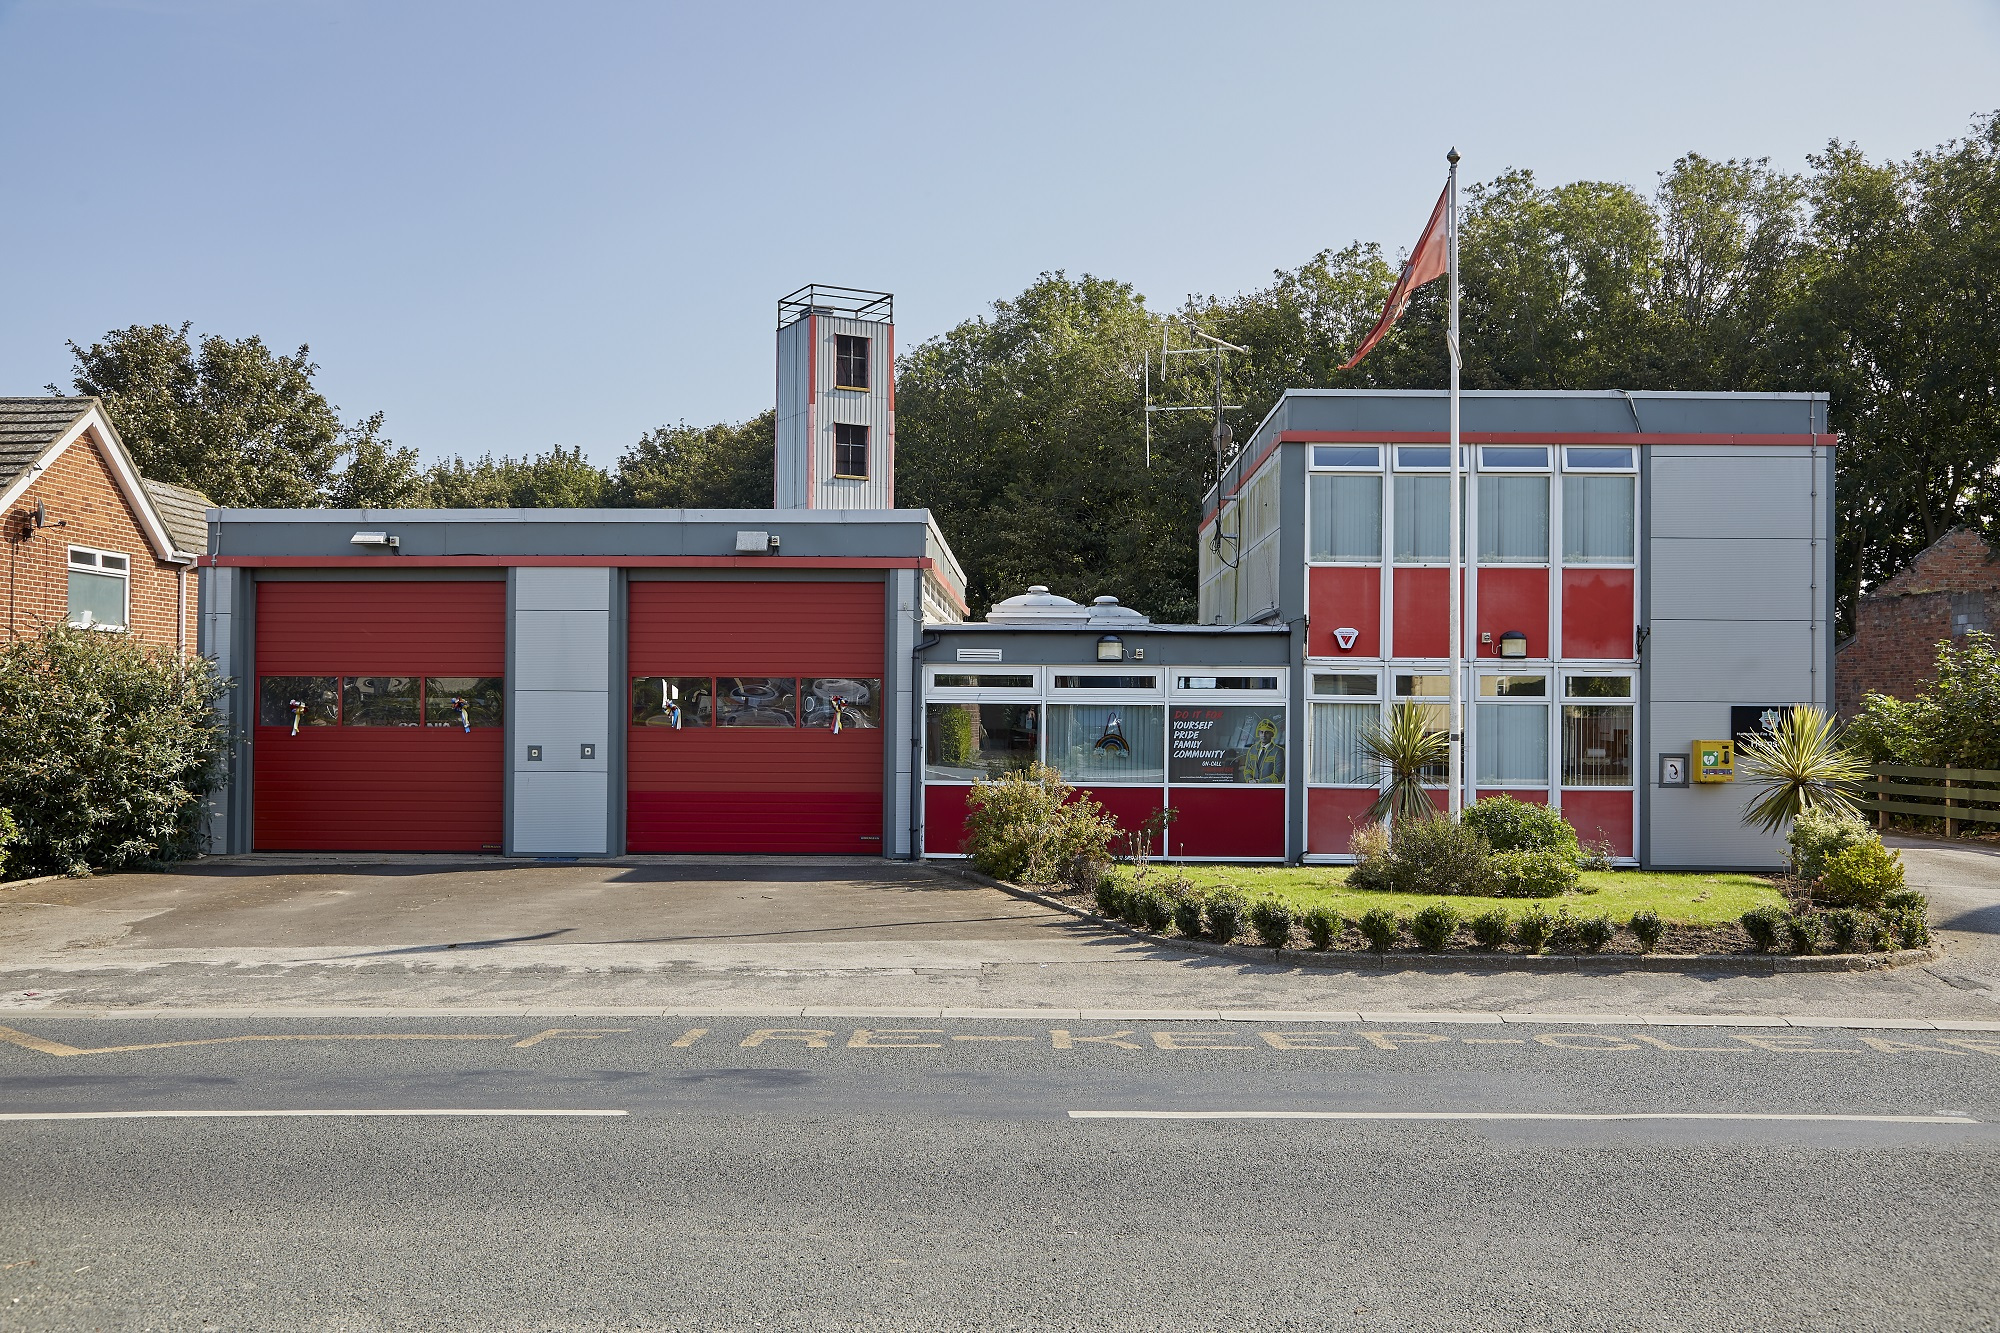 Hornsea fire station